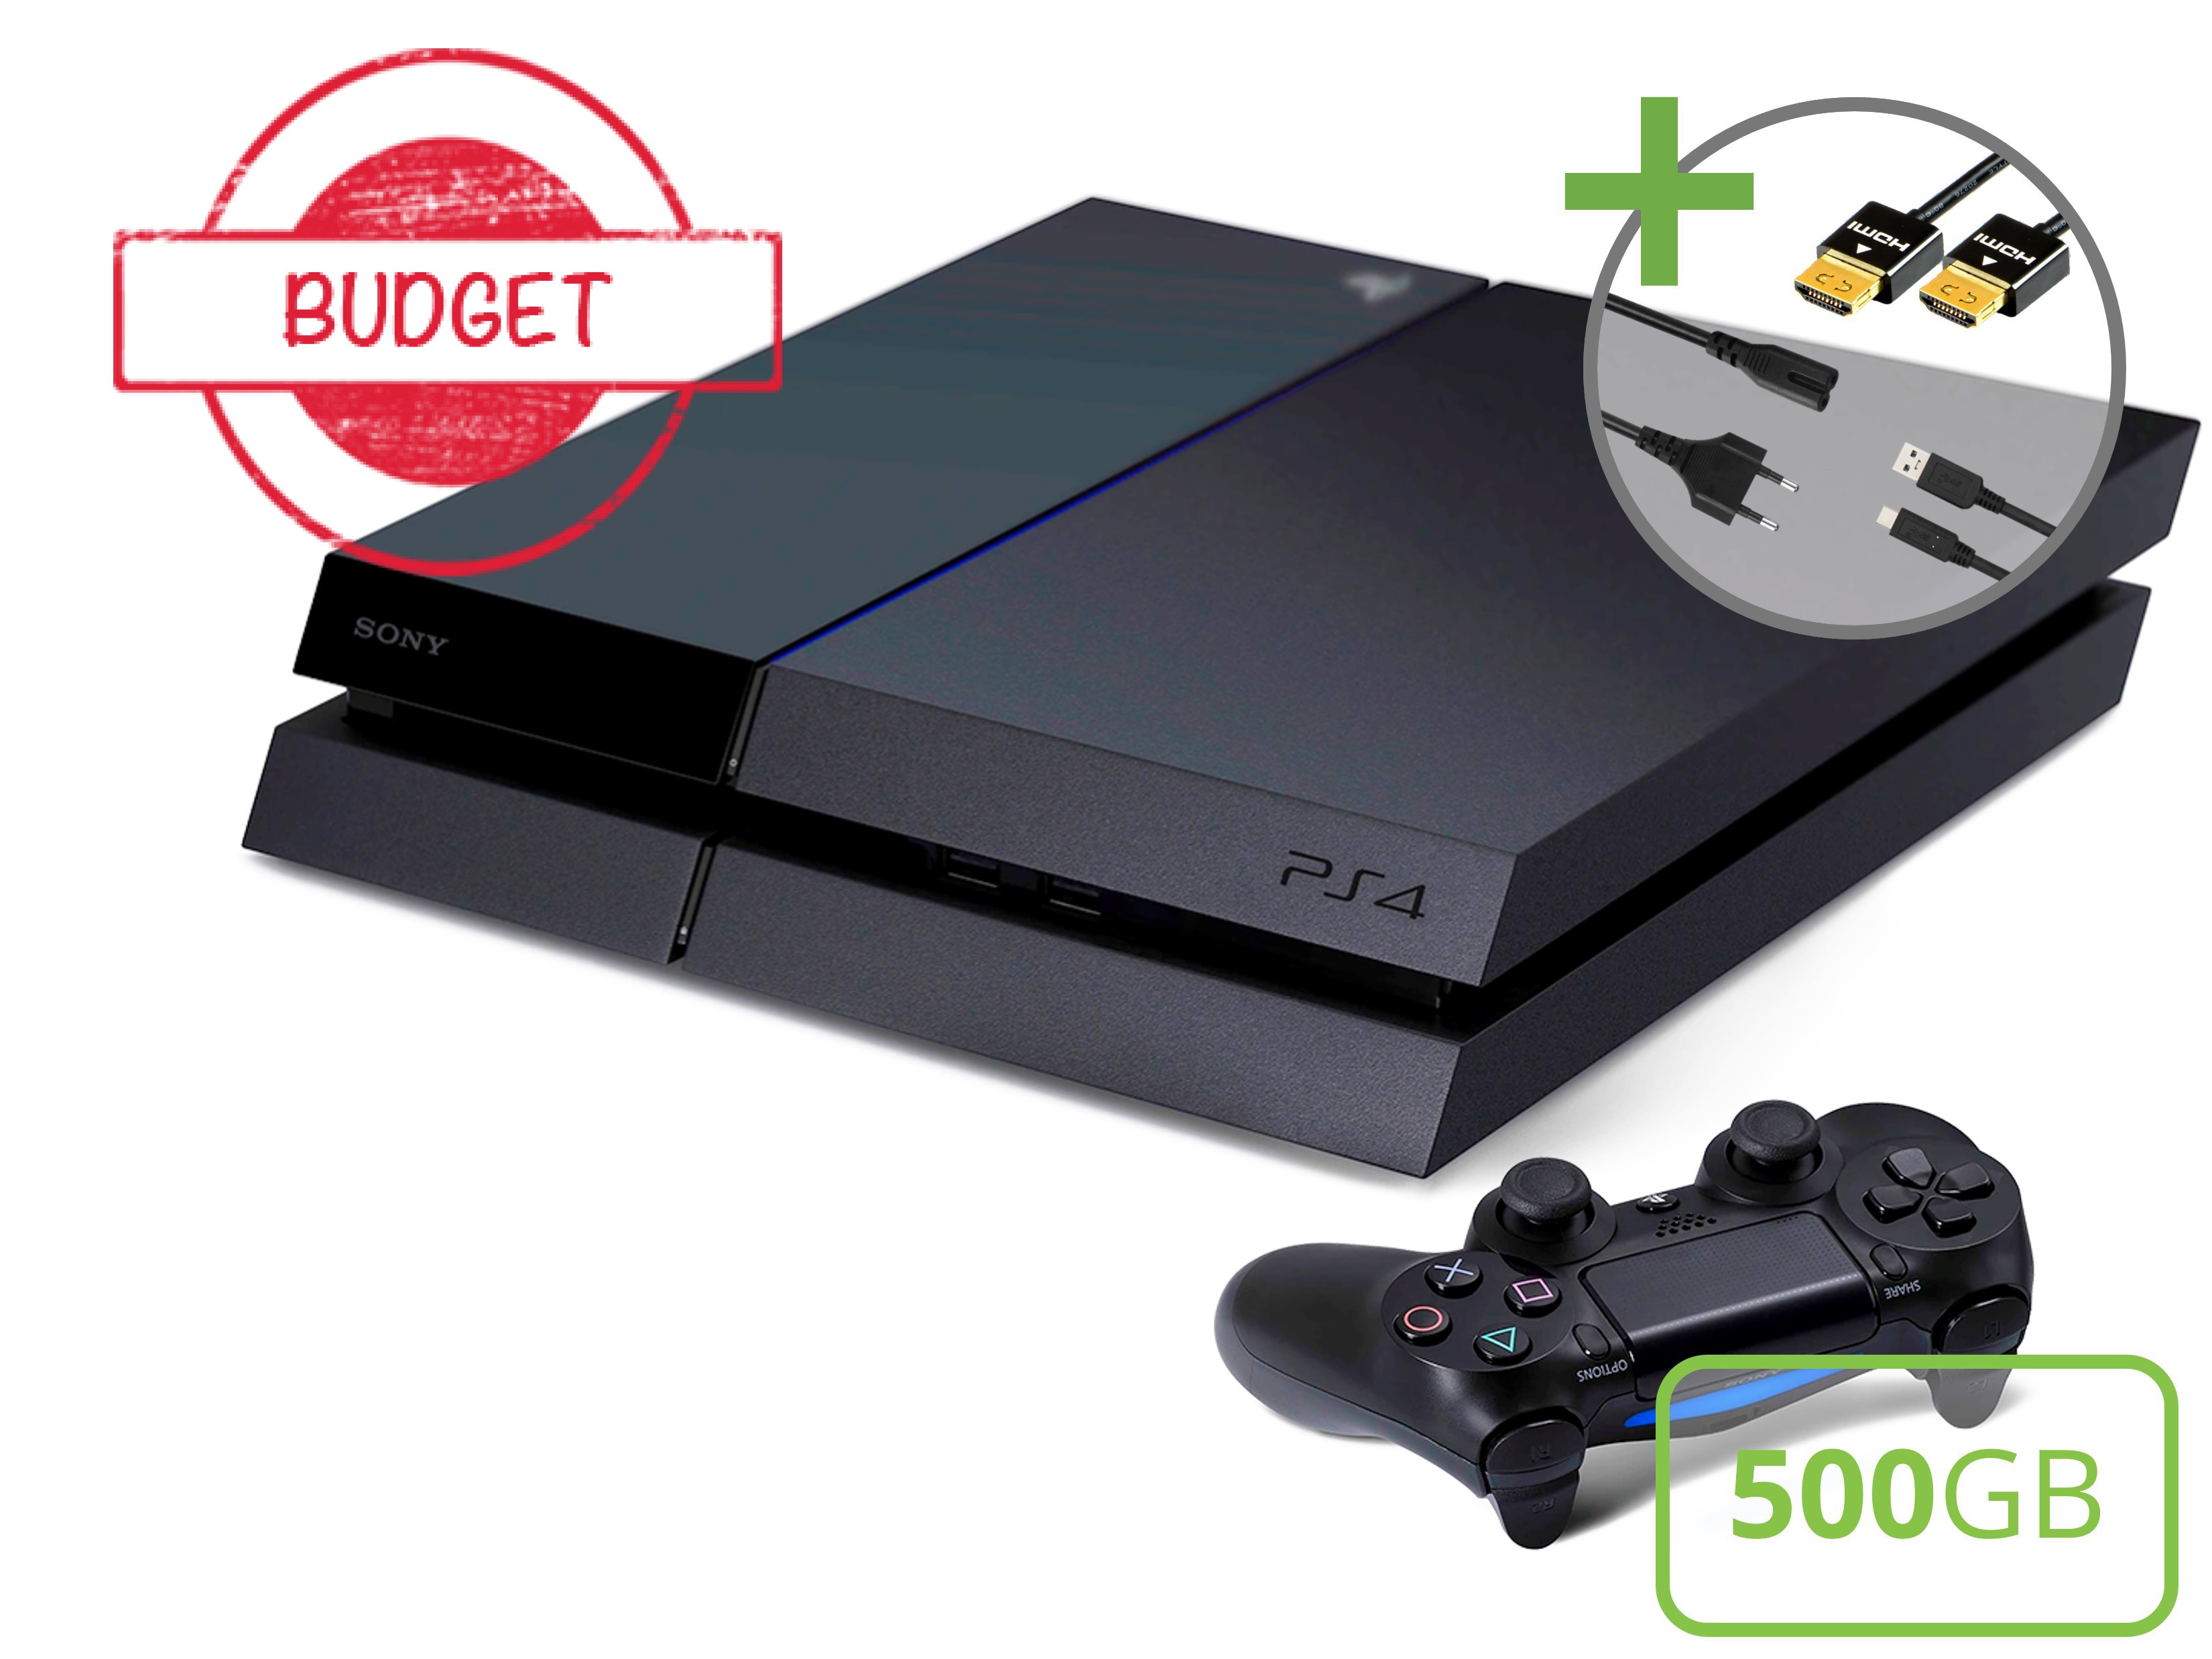 Sony PlayStation 4 Starter Pack - 500GB DualShock V1 Edition - Budget Kopen | Playstation 4 Hardware